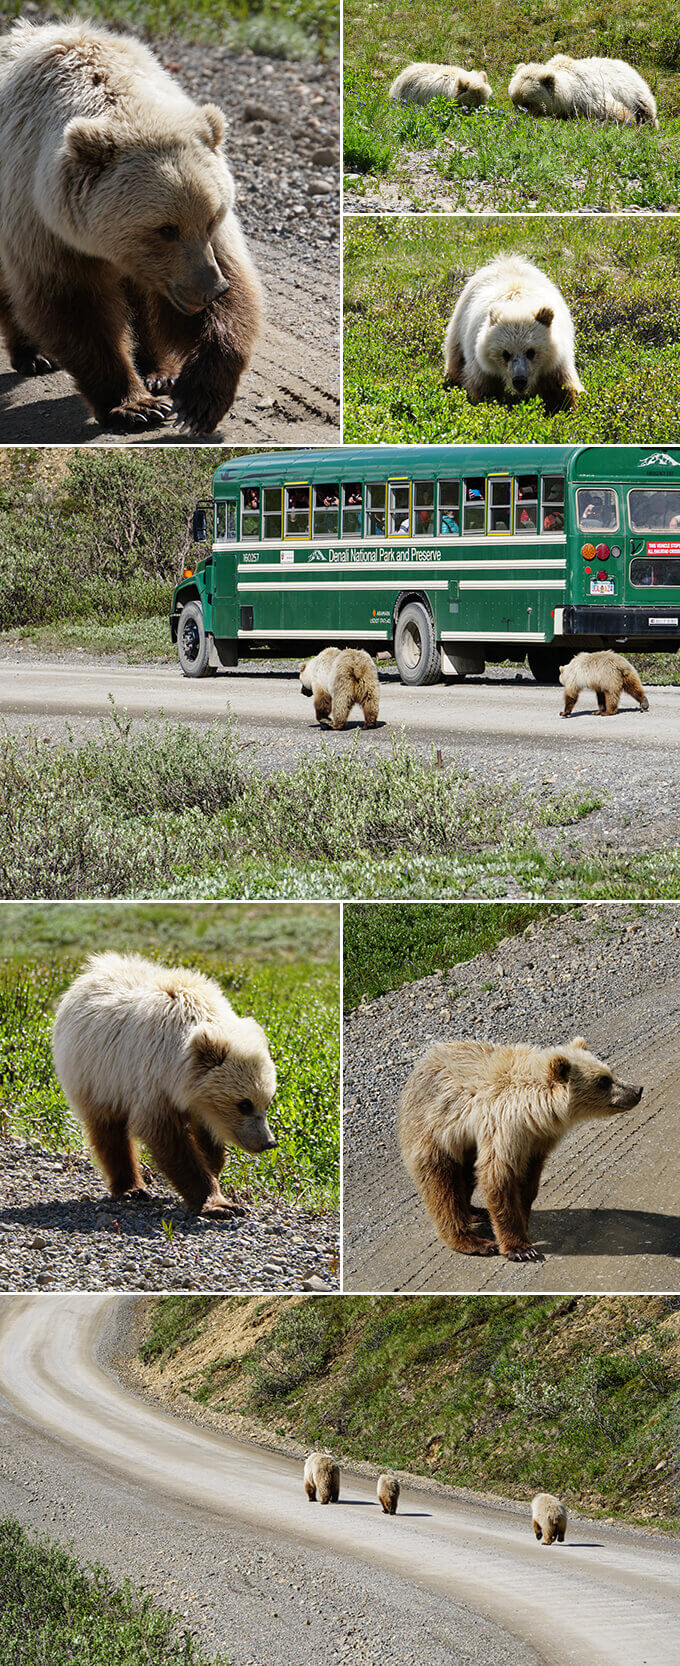 Into the wild Alaska - Grizzly bears at Denali National Park, Alaska | www.viktoriastable.com